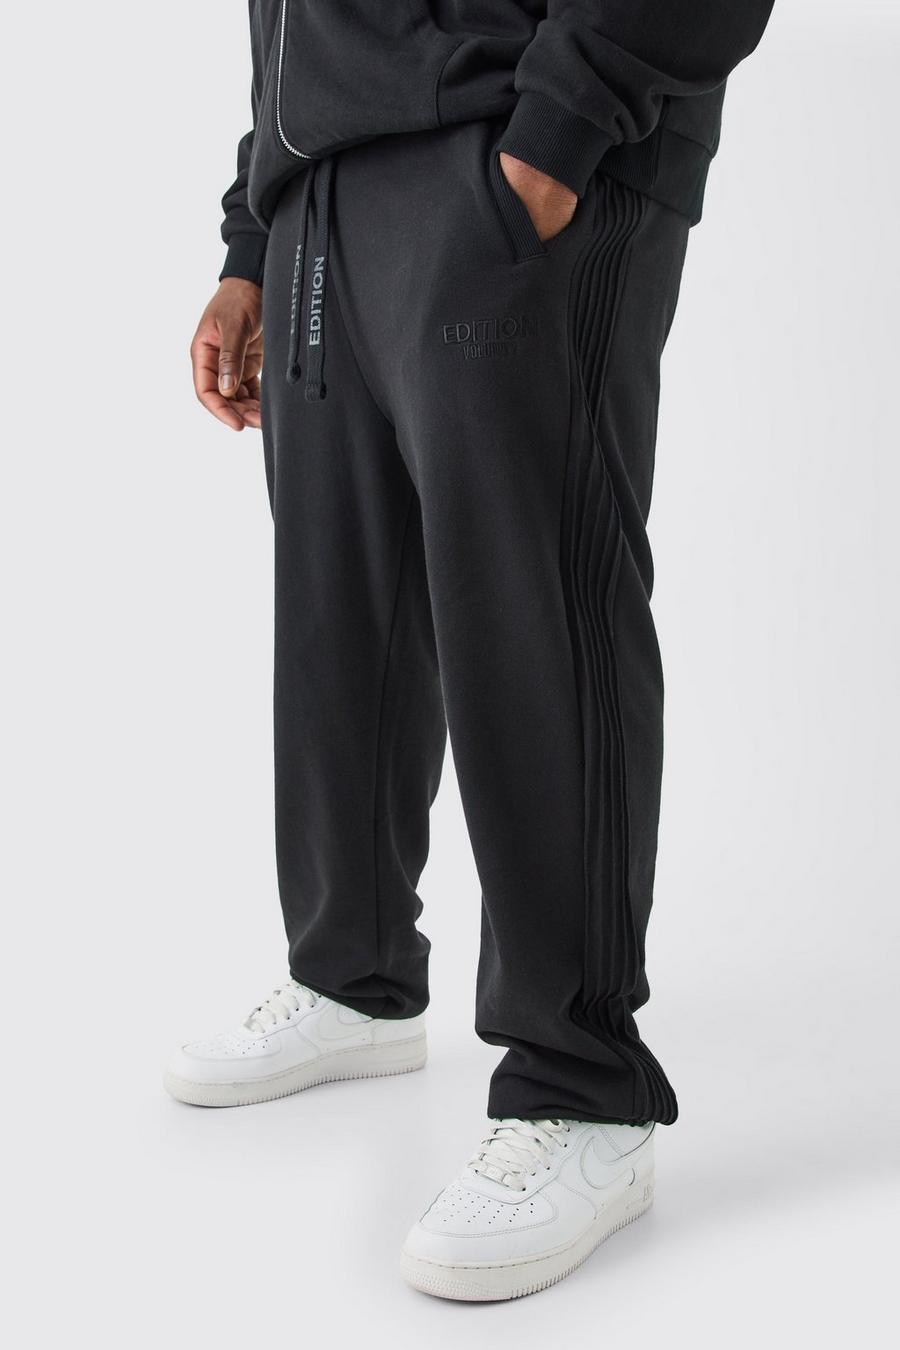 Pantaloni tuta pesanti Plus Size EDITION oversize con nervature, Black